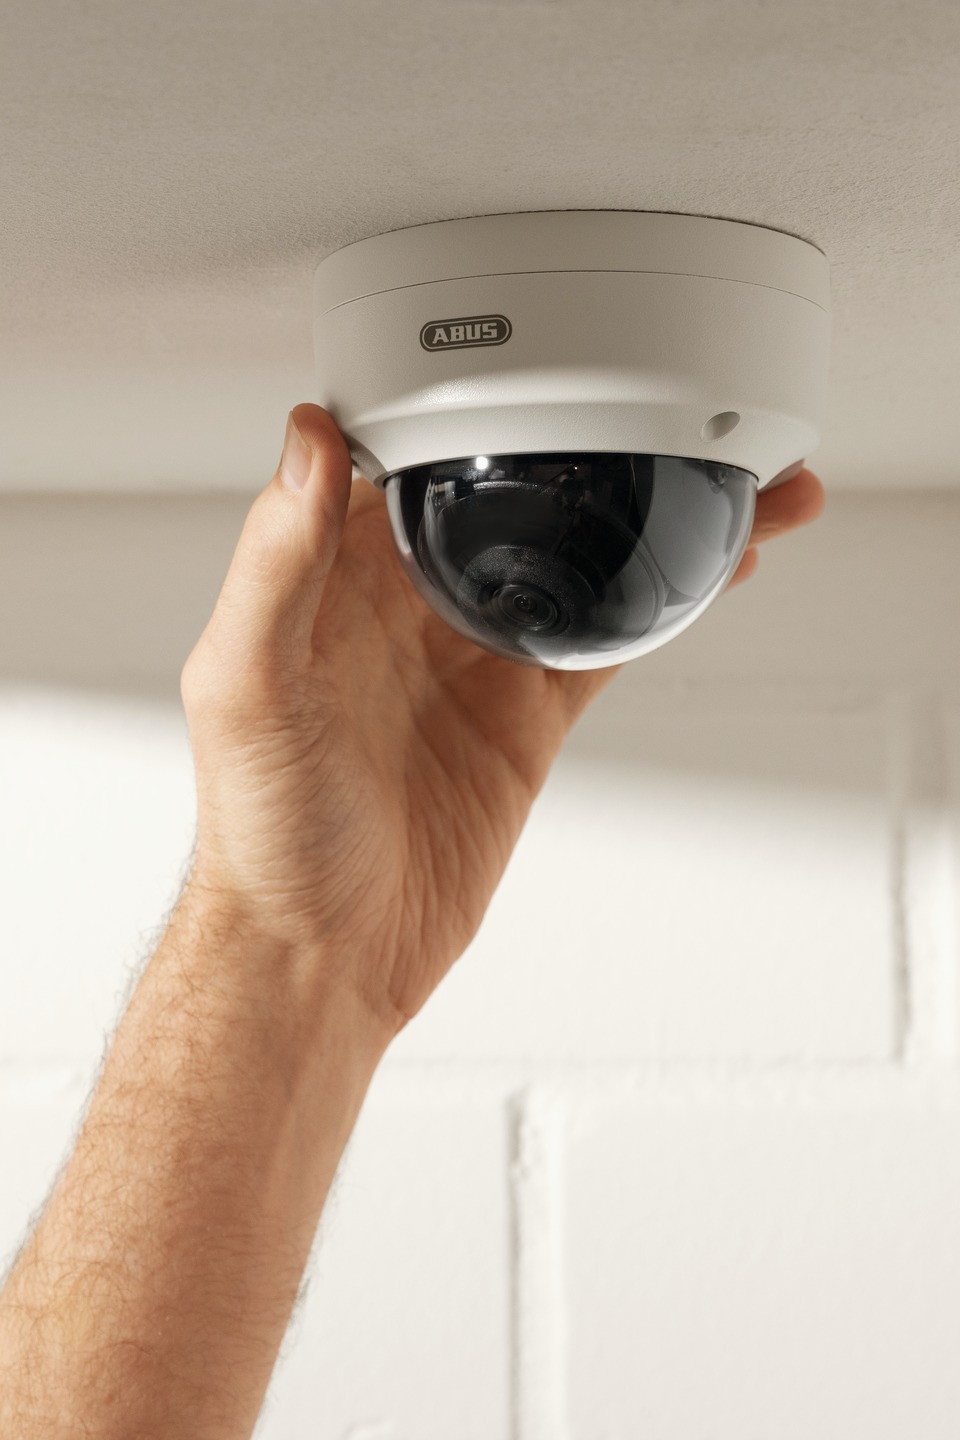 ABUS IP-videobewaking 4MPx Mini Dome-Camera